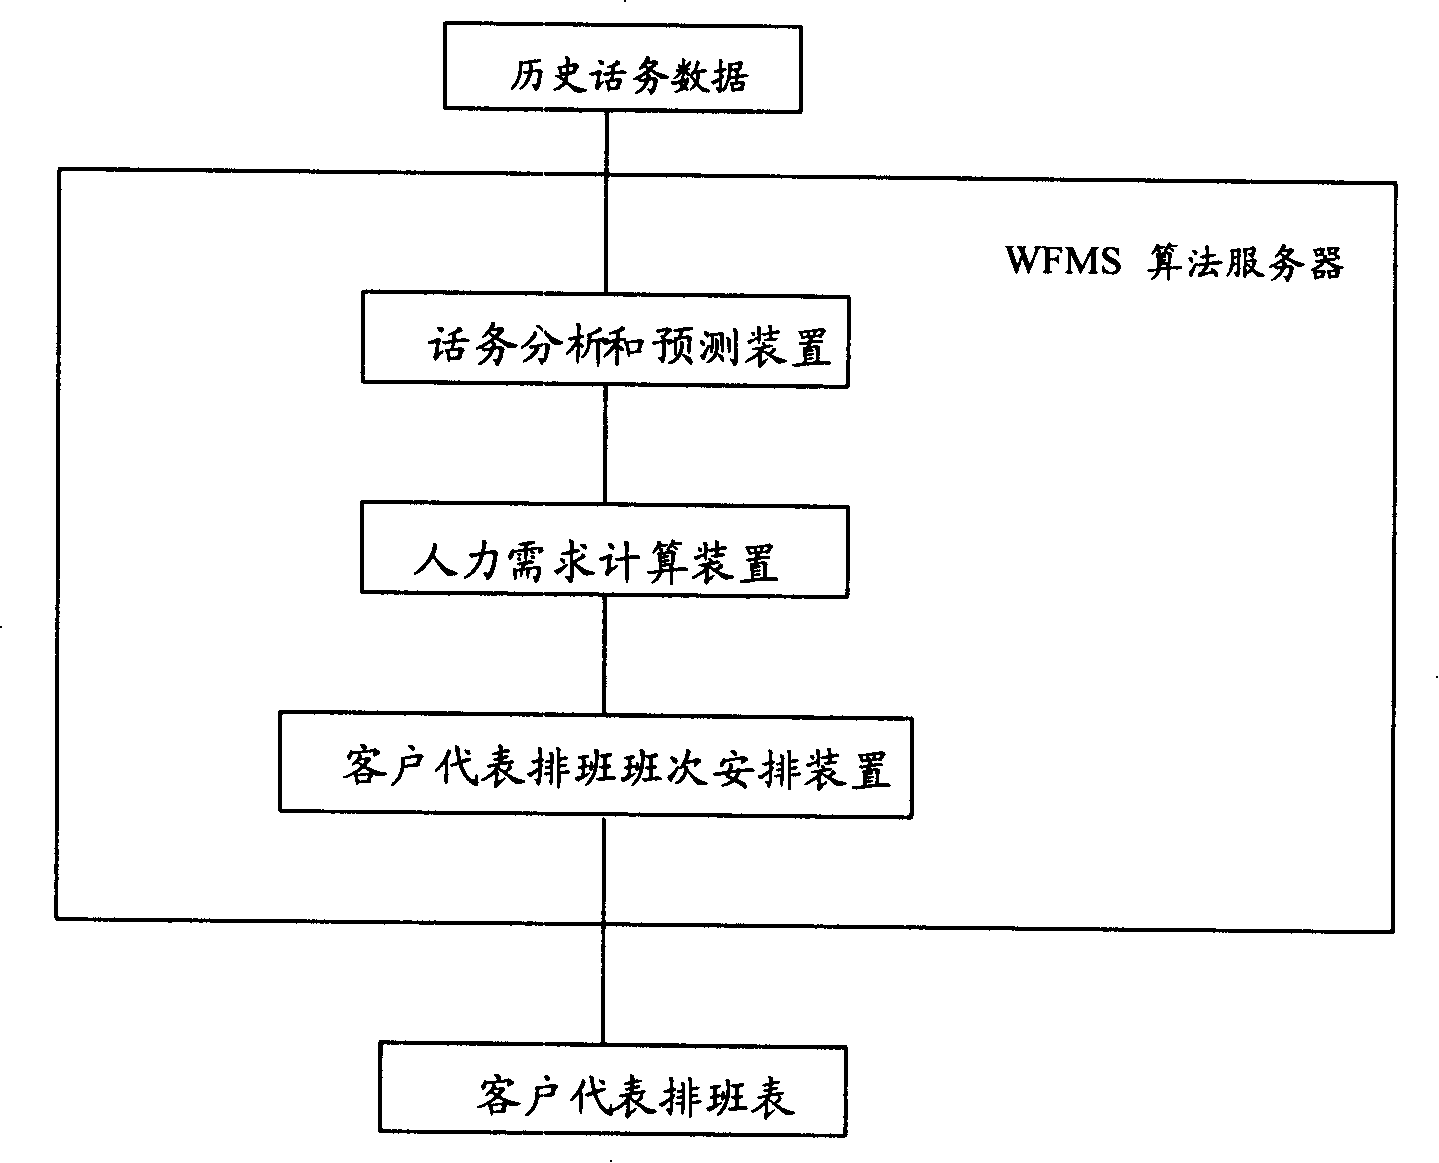 System and method for shift arrangement